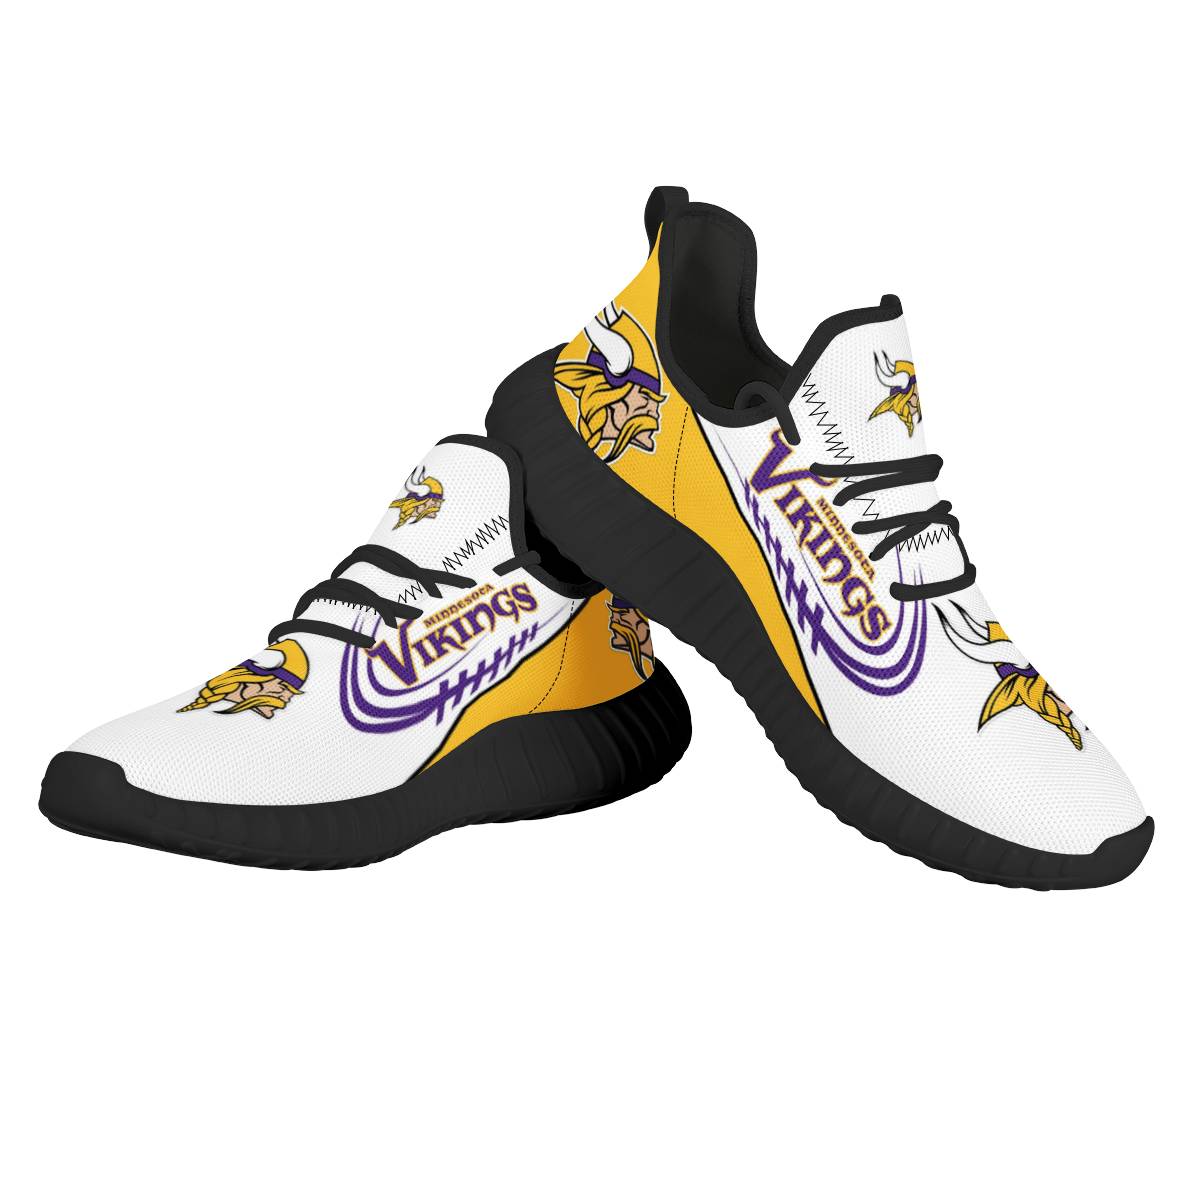 Women's NFL Minnesota Vikings Mesh Knit Sneakers/Shoes 002